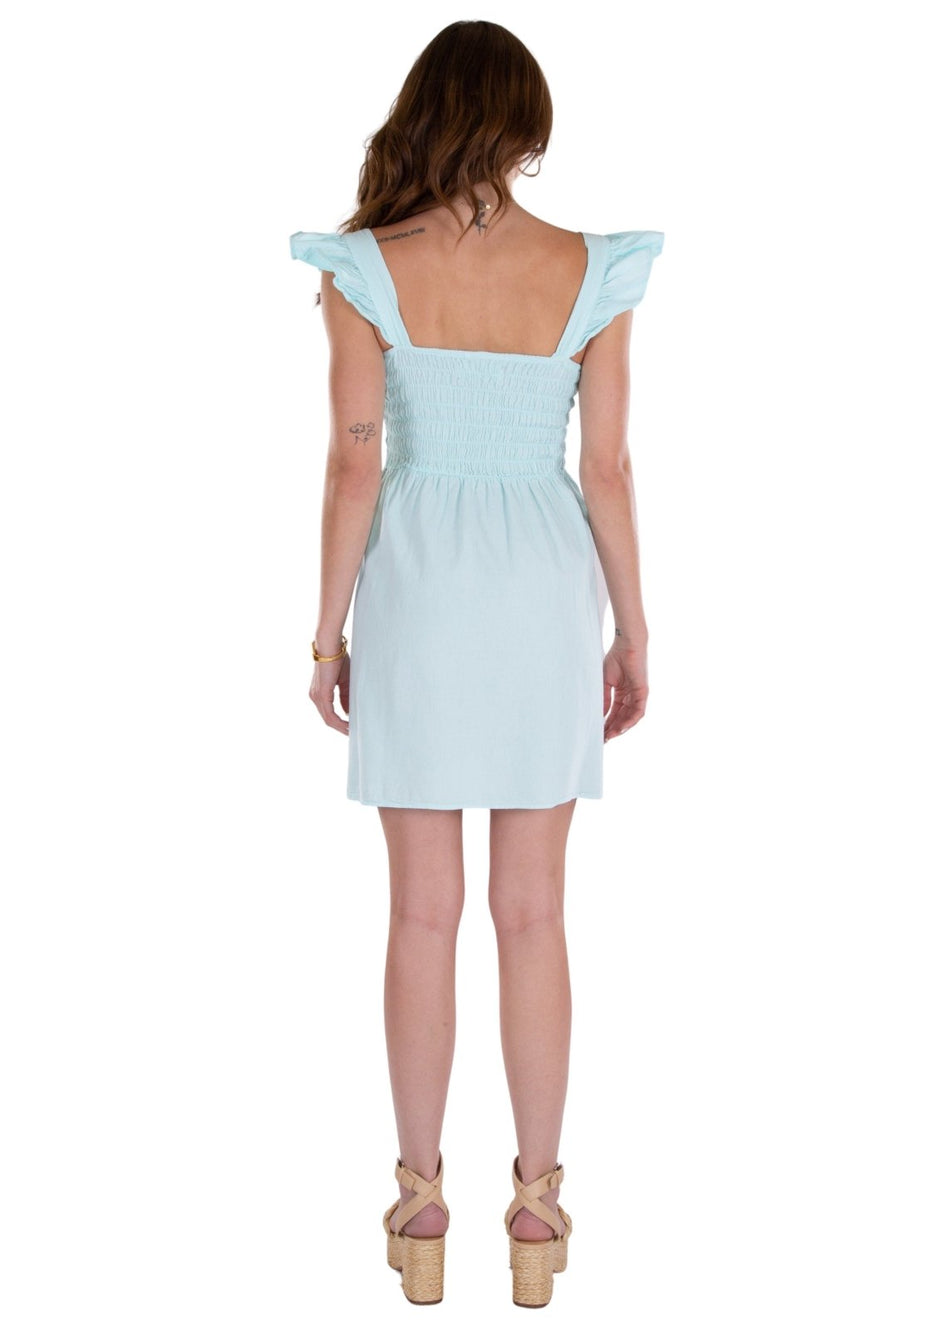 Malia' Ruffle Shoulder Dress Baby Turquoise - Seaspice Resort Wear